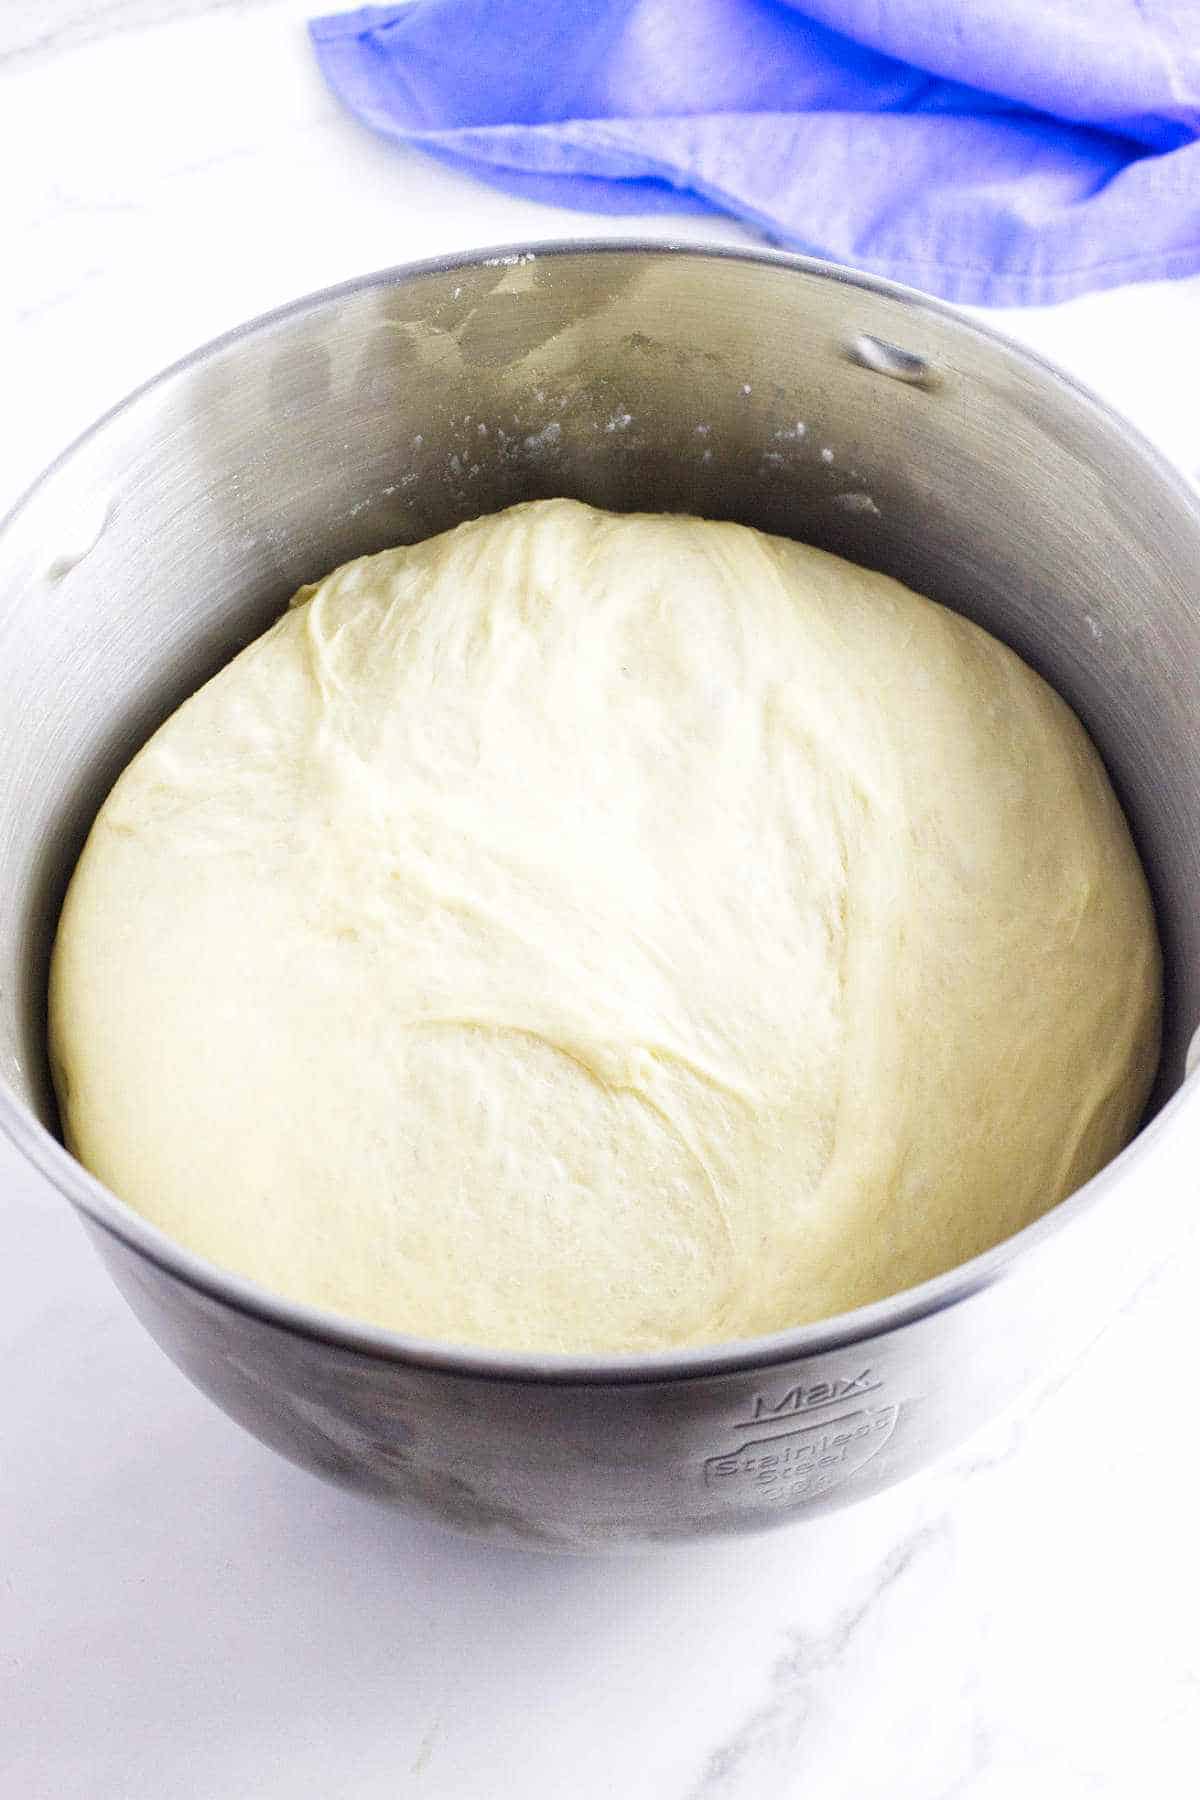 bulk risen dough in a bowl.